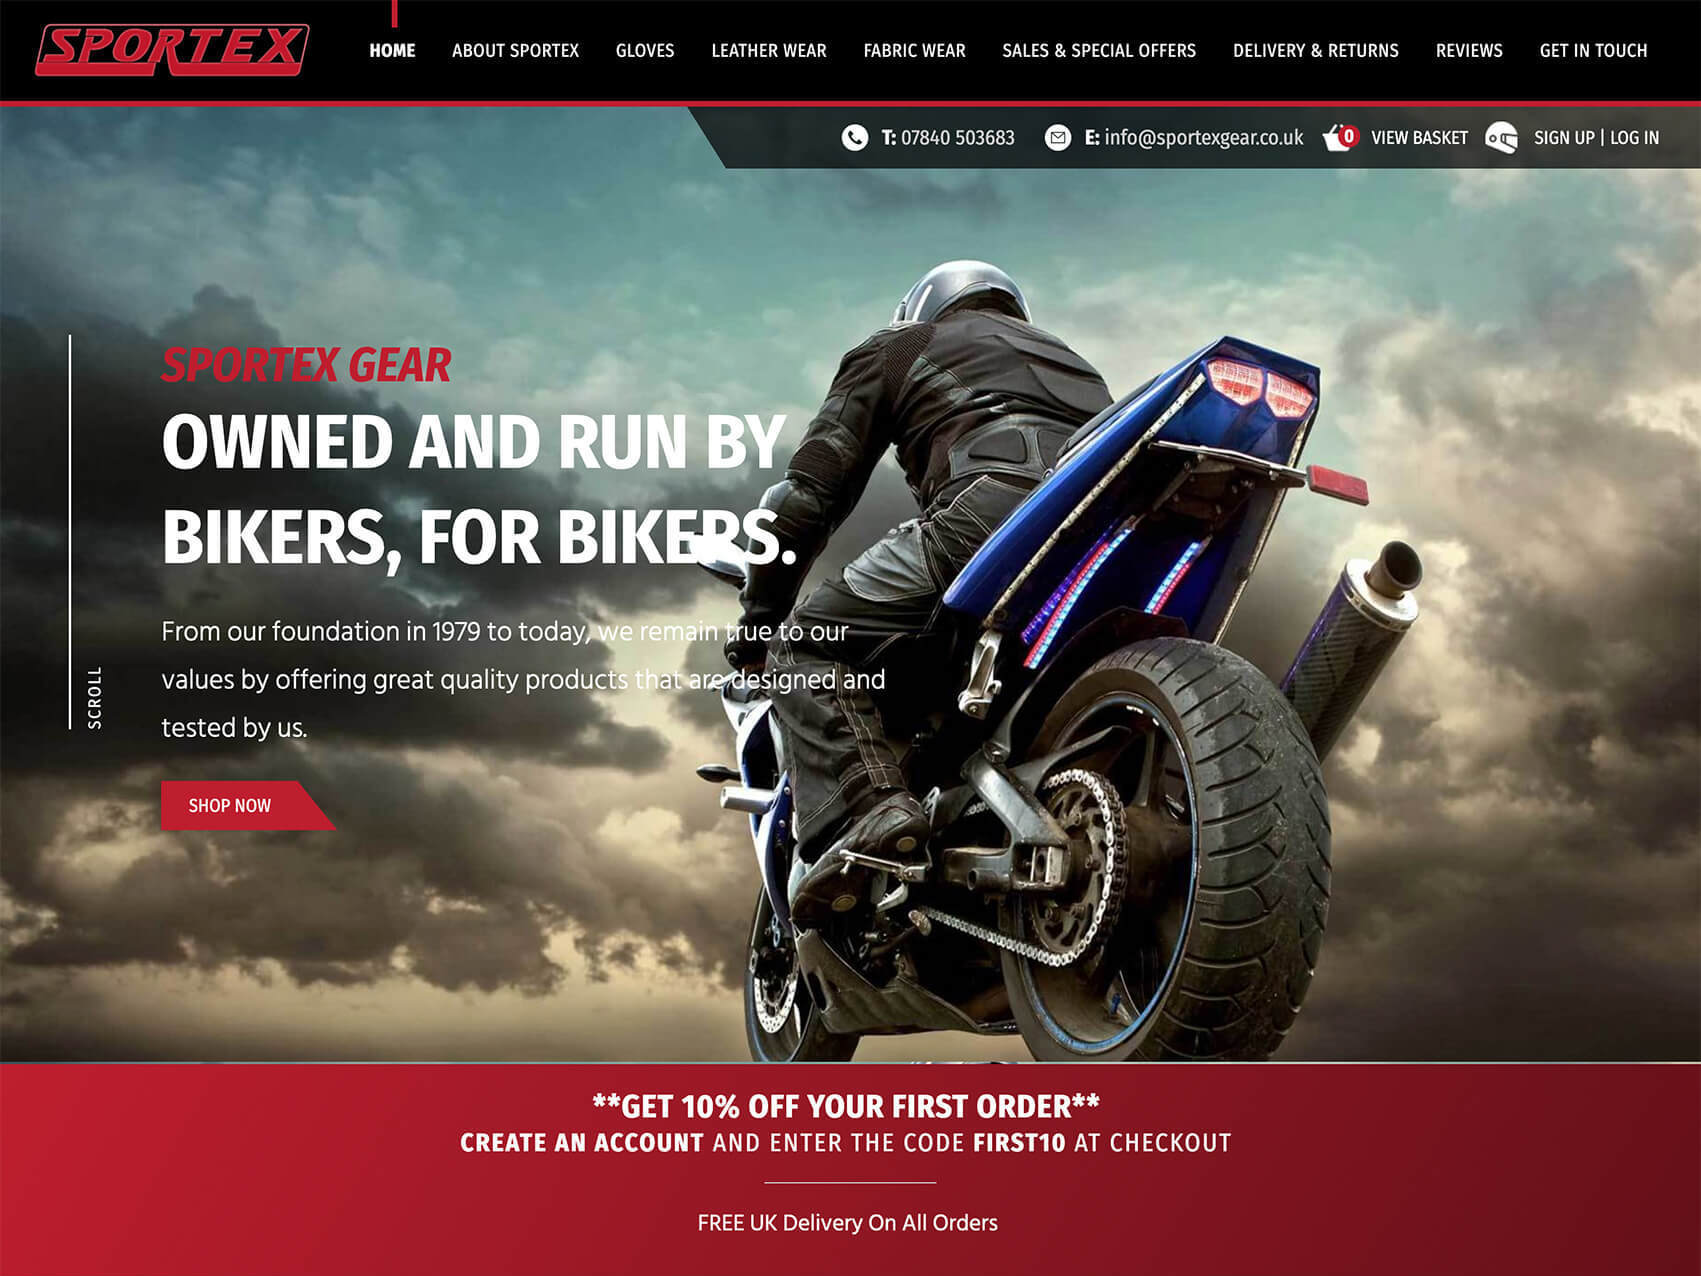 Sportex Gear website design